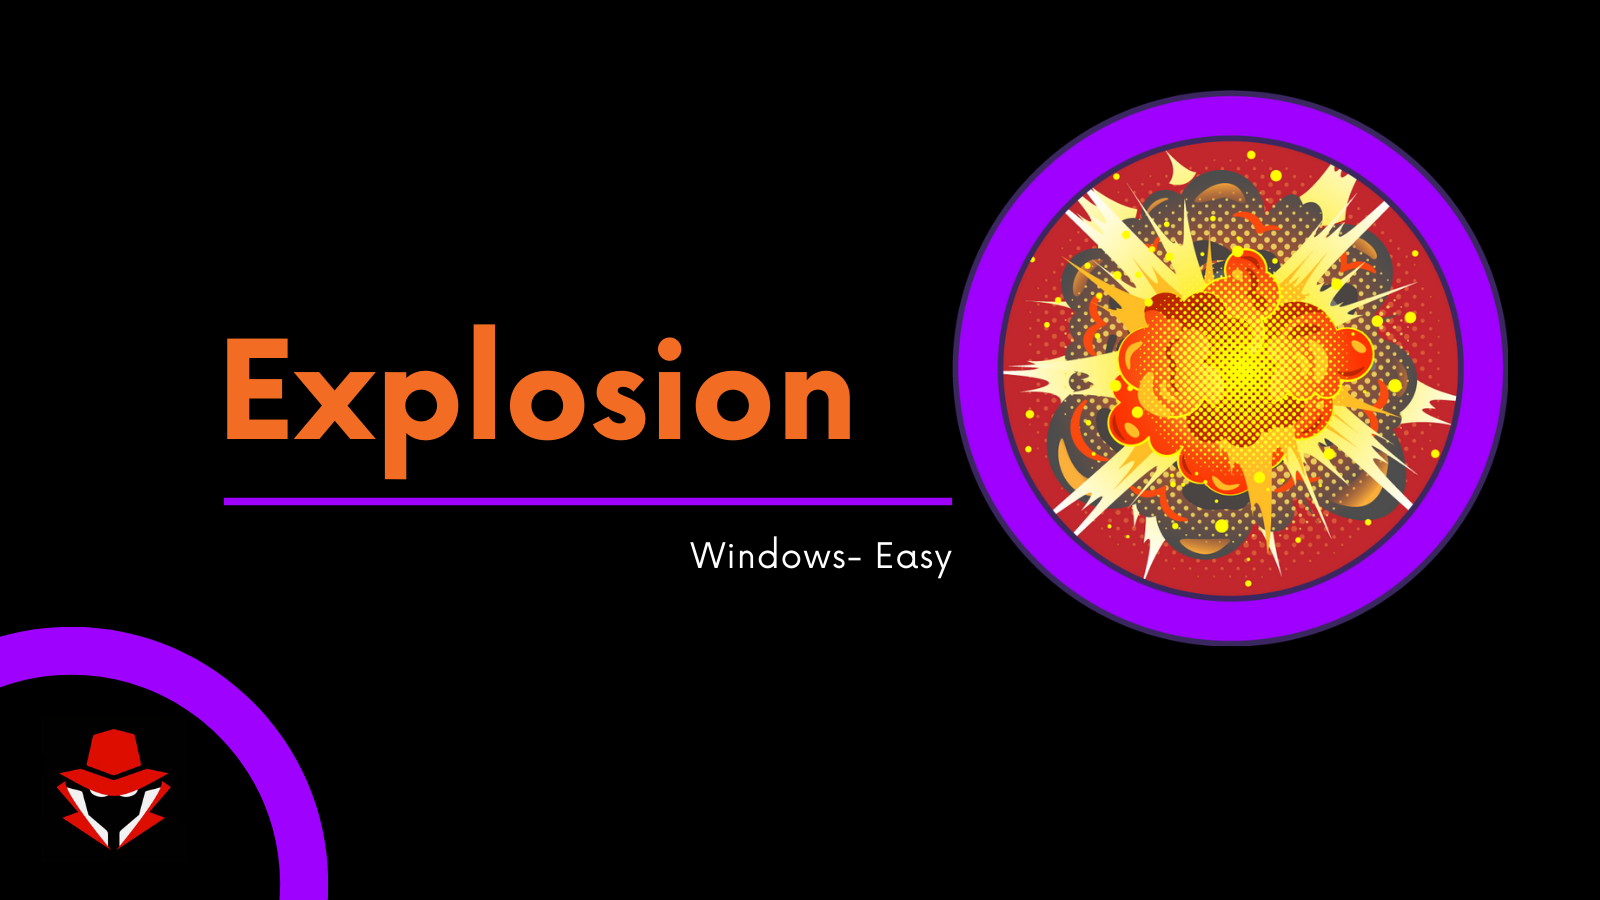 Explosion image